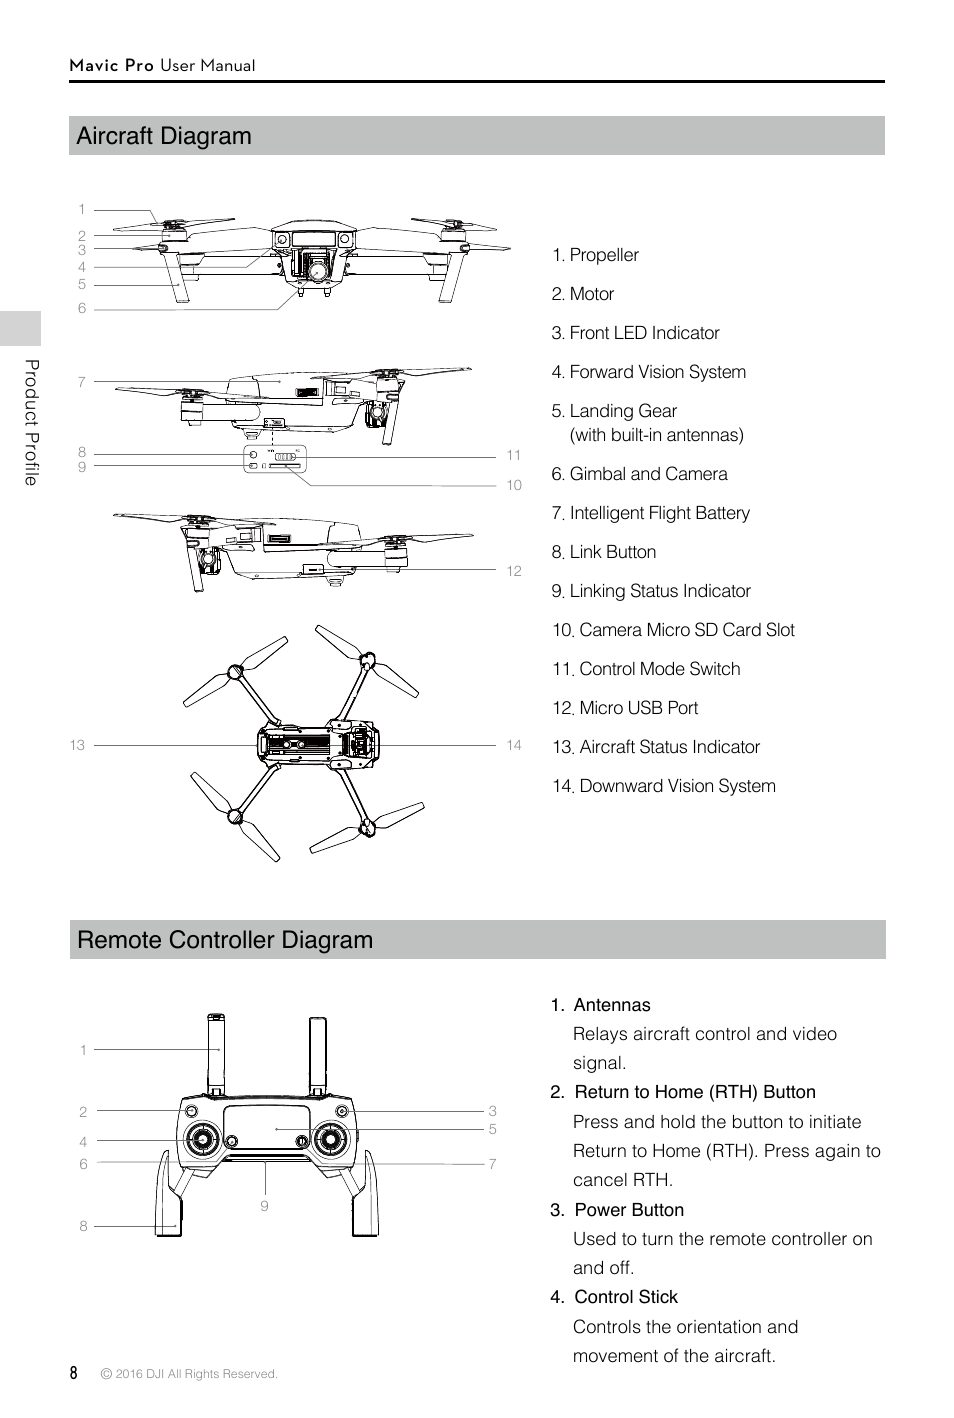 Aircraft diagram, Remote controller diagram, Aircraft diagram remote  controller diagram | DJI Mavic Pro User Manual | Page 8 / 60